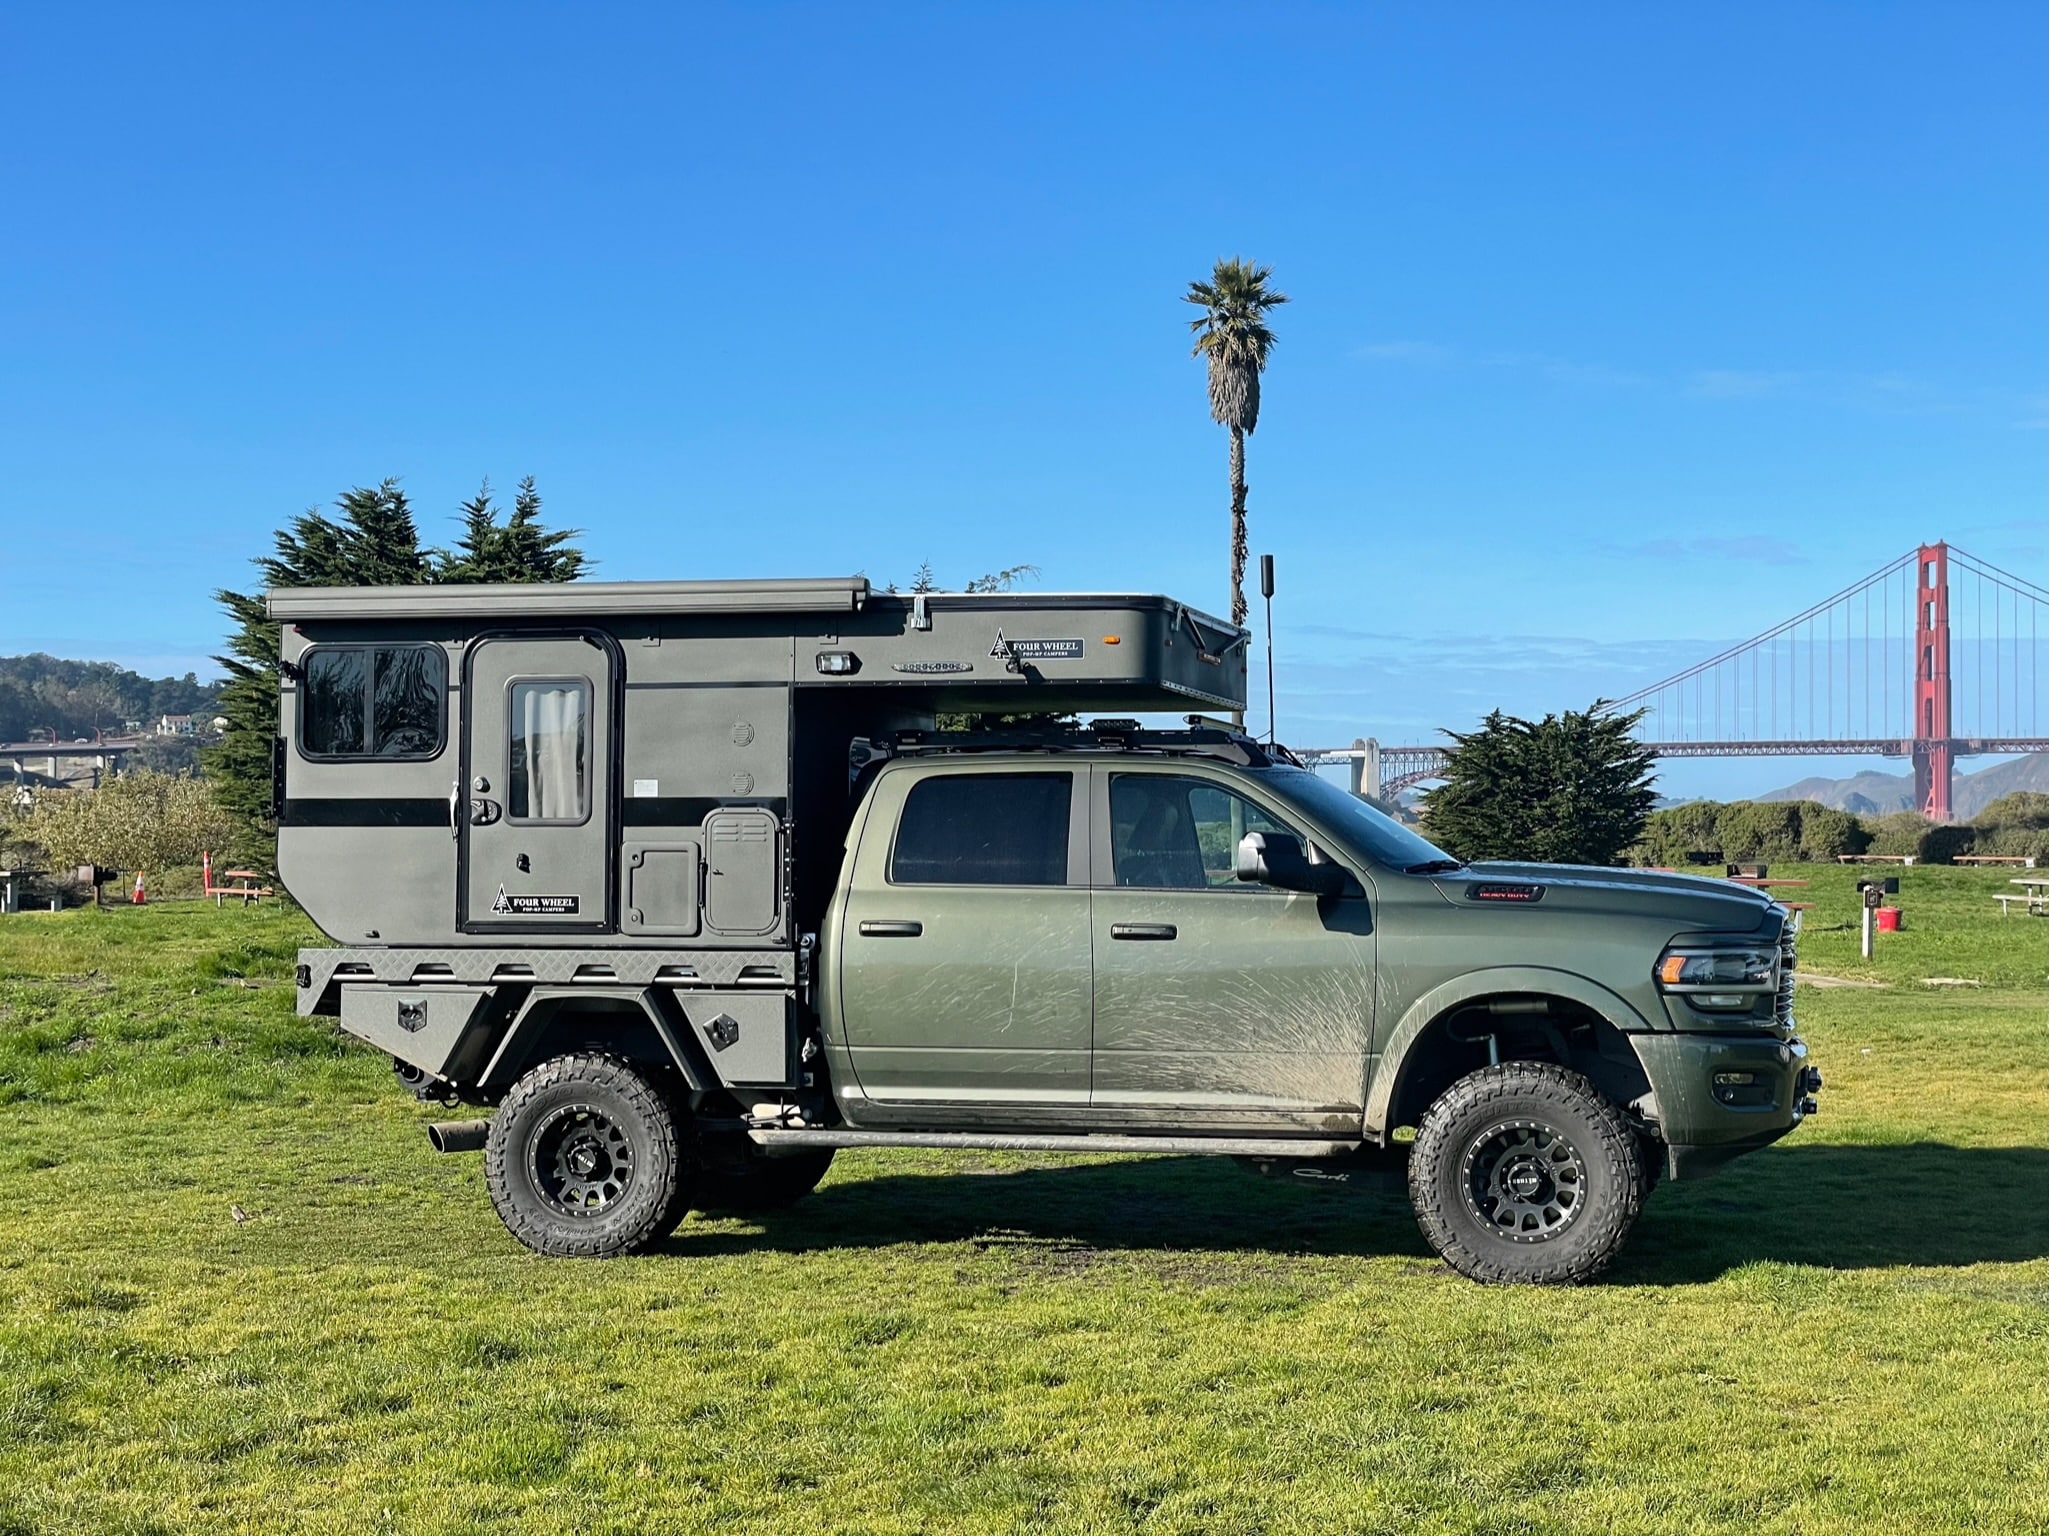 Sean Silvera's Truck Camper with the Golden Gate Bridge in San Francisco, CA